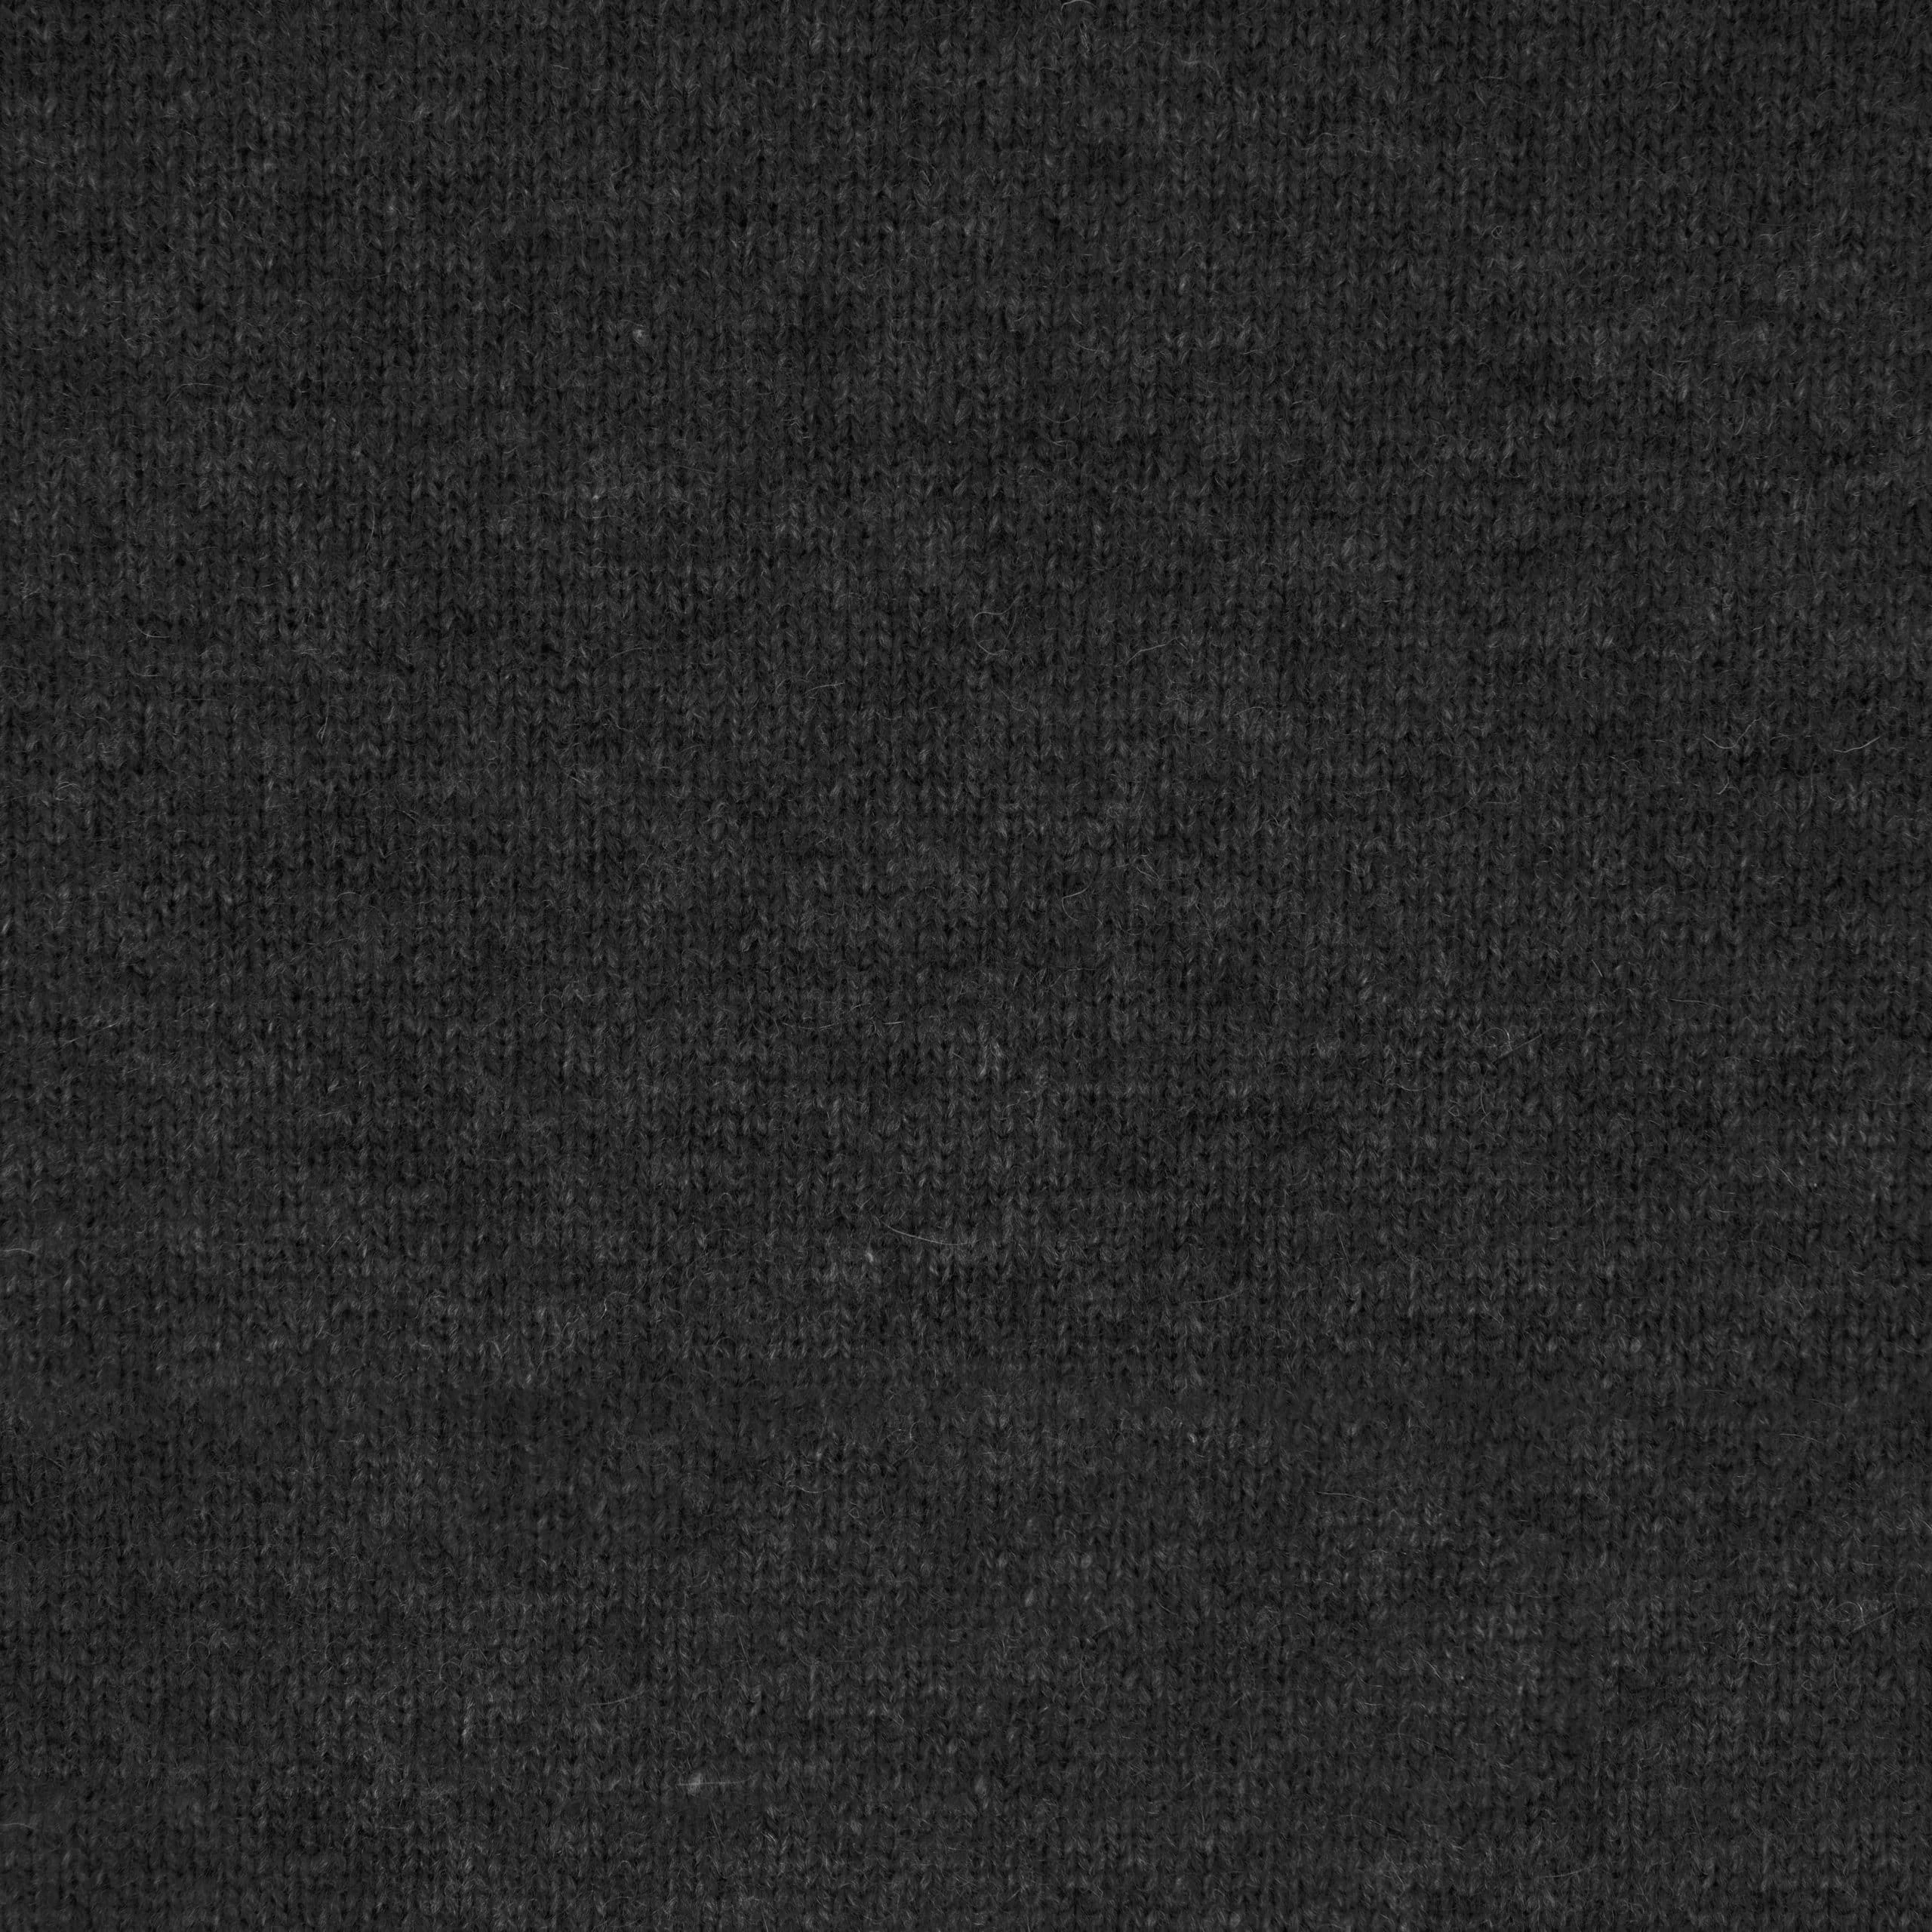 MO 150 Bay Sofa Midnight Black Fabric Closeup 4 scaled 1 1